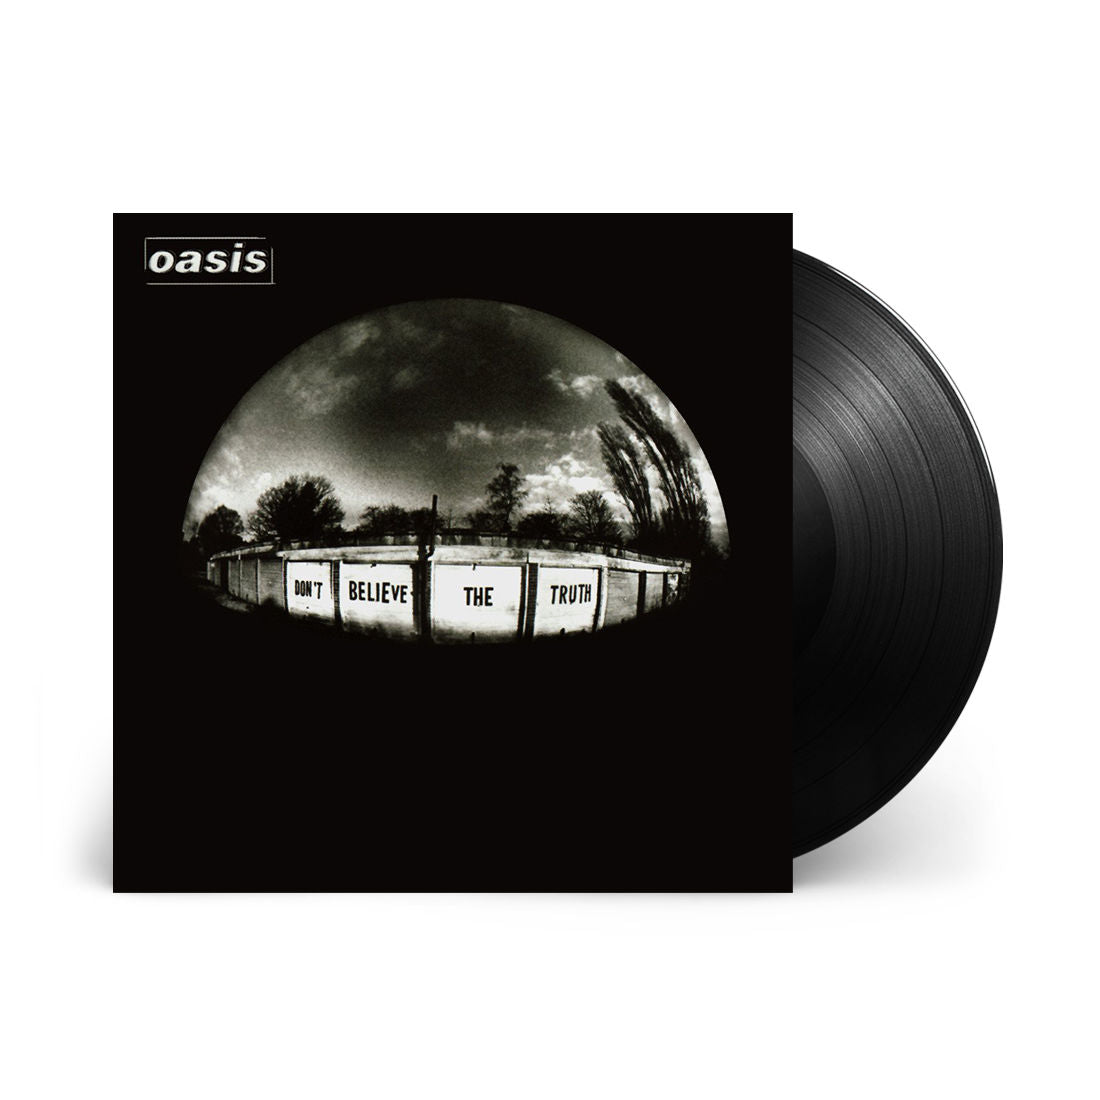 Oasis - Don't Believe The Truth: Vinyl LP - Sound of Vinyl